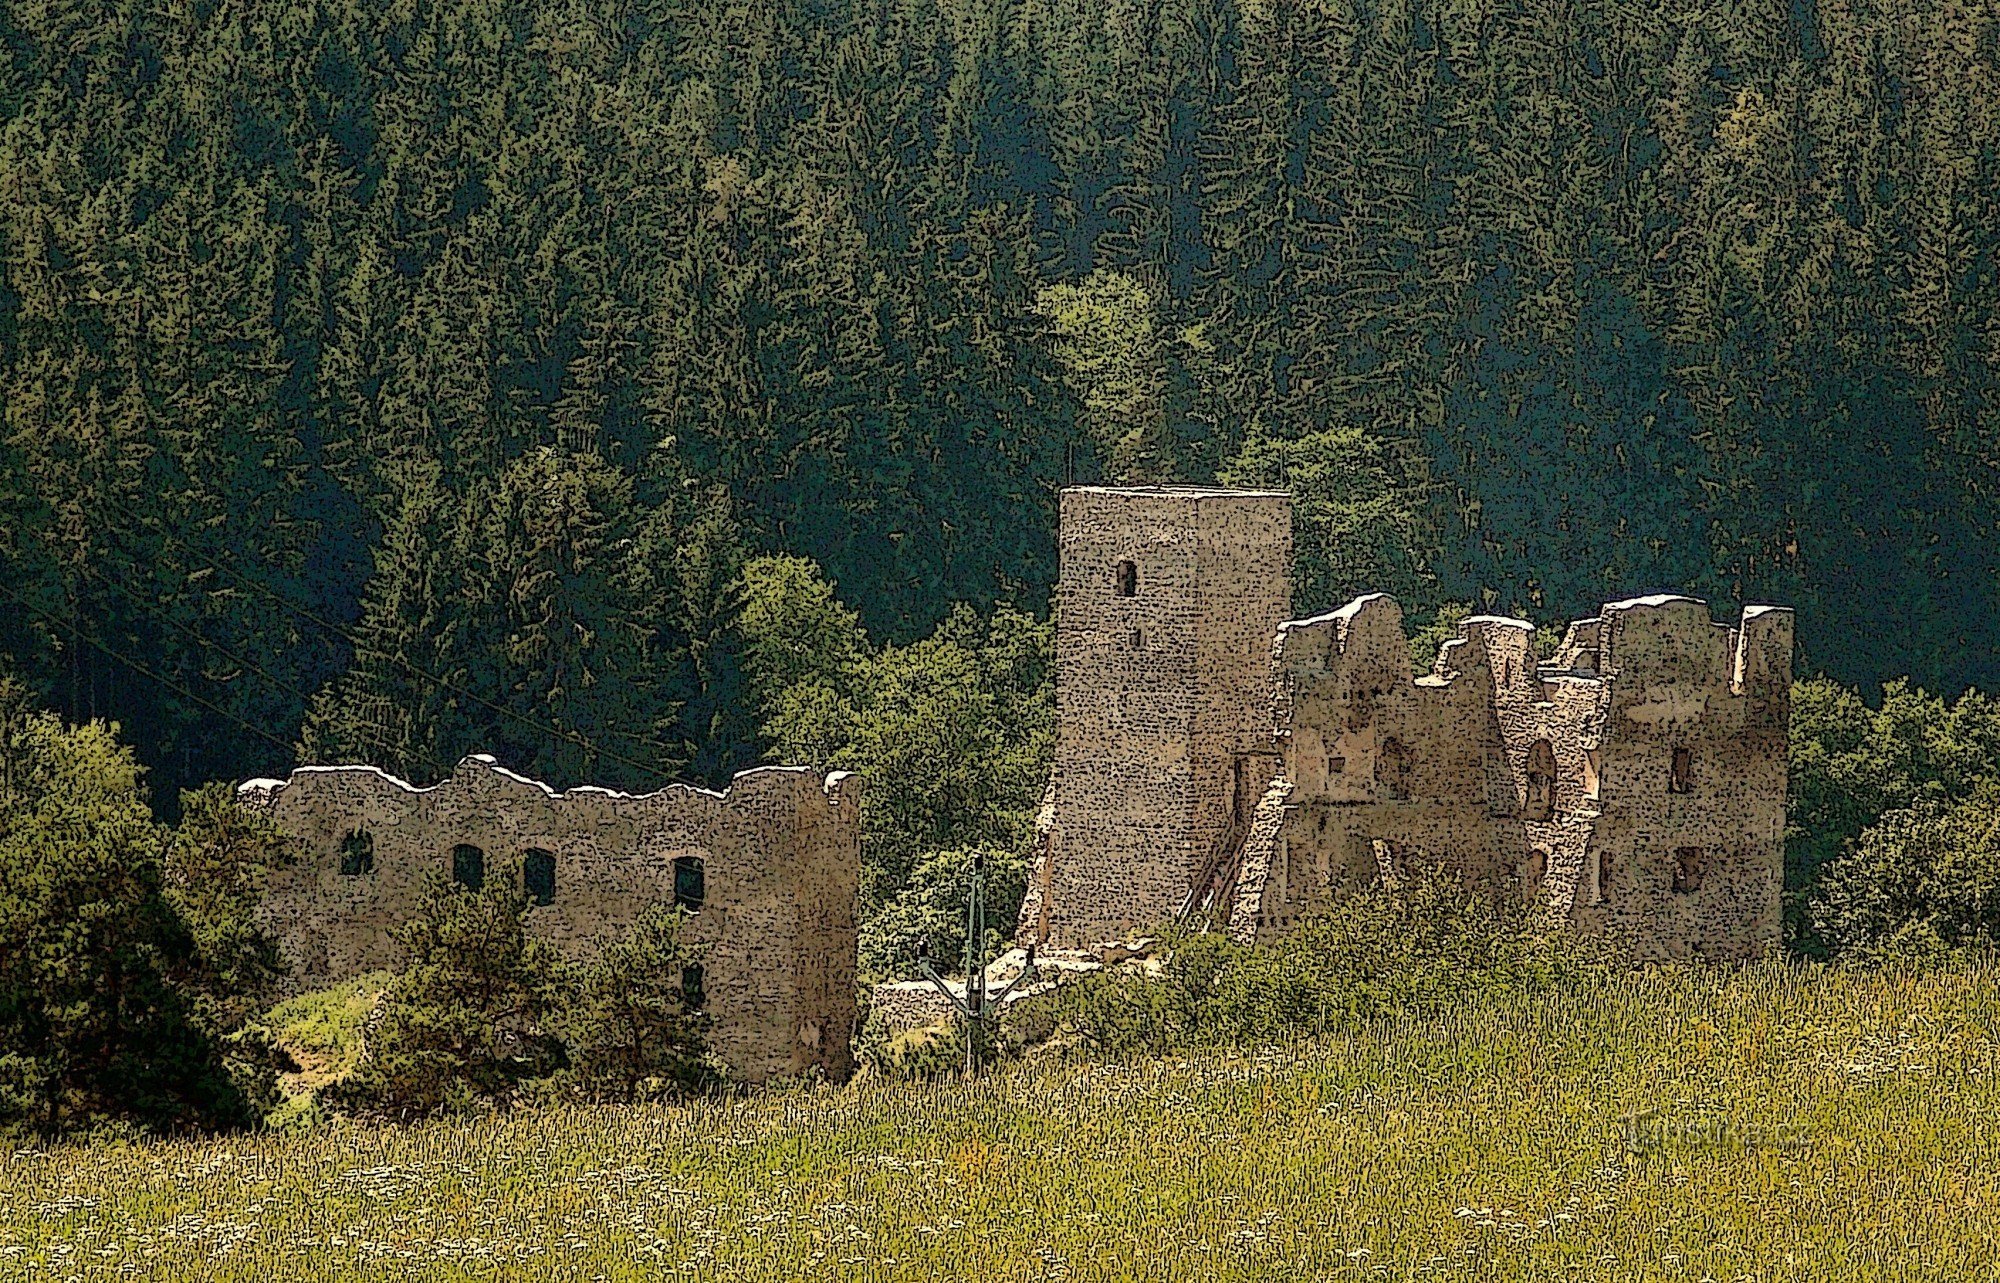 Excursión a las ruinas del castillo de Rokštejna en Vysočina